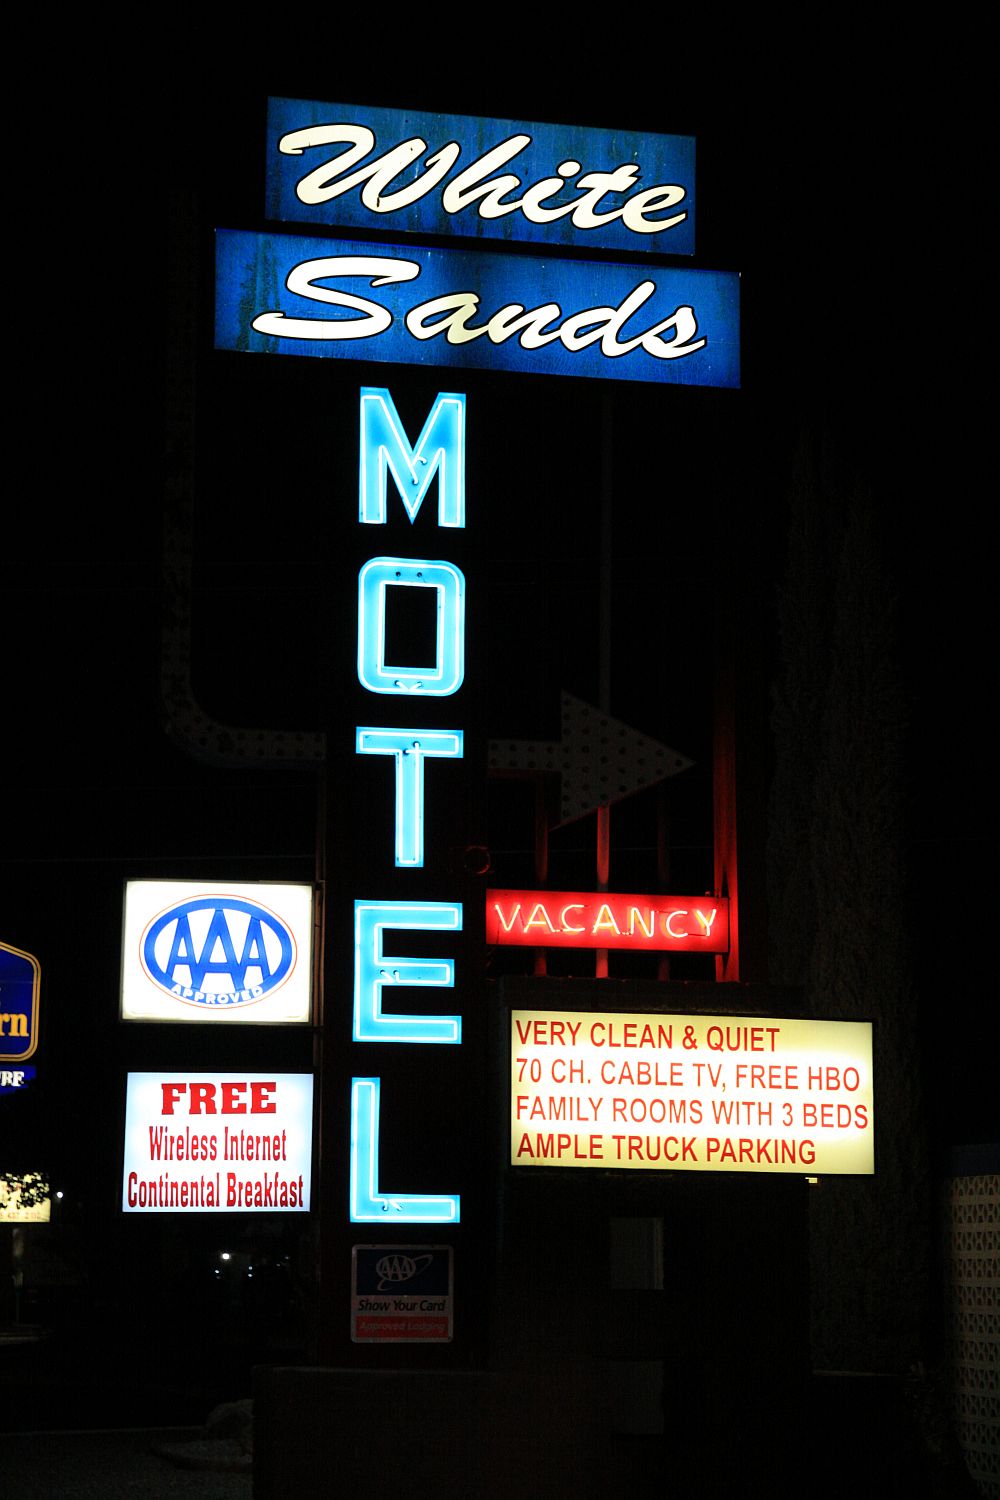 White Sands Motel